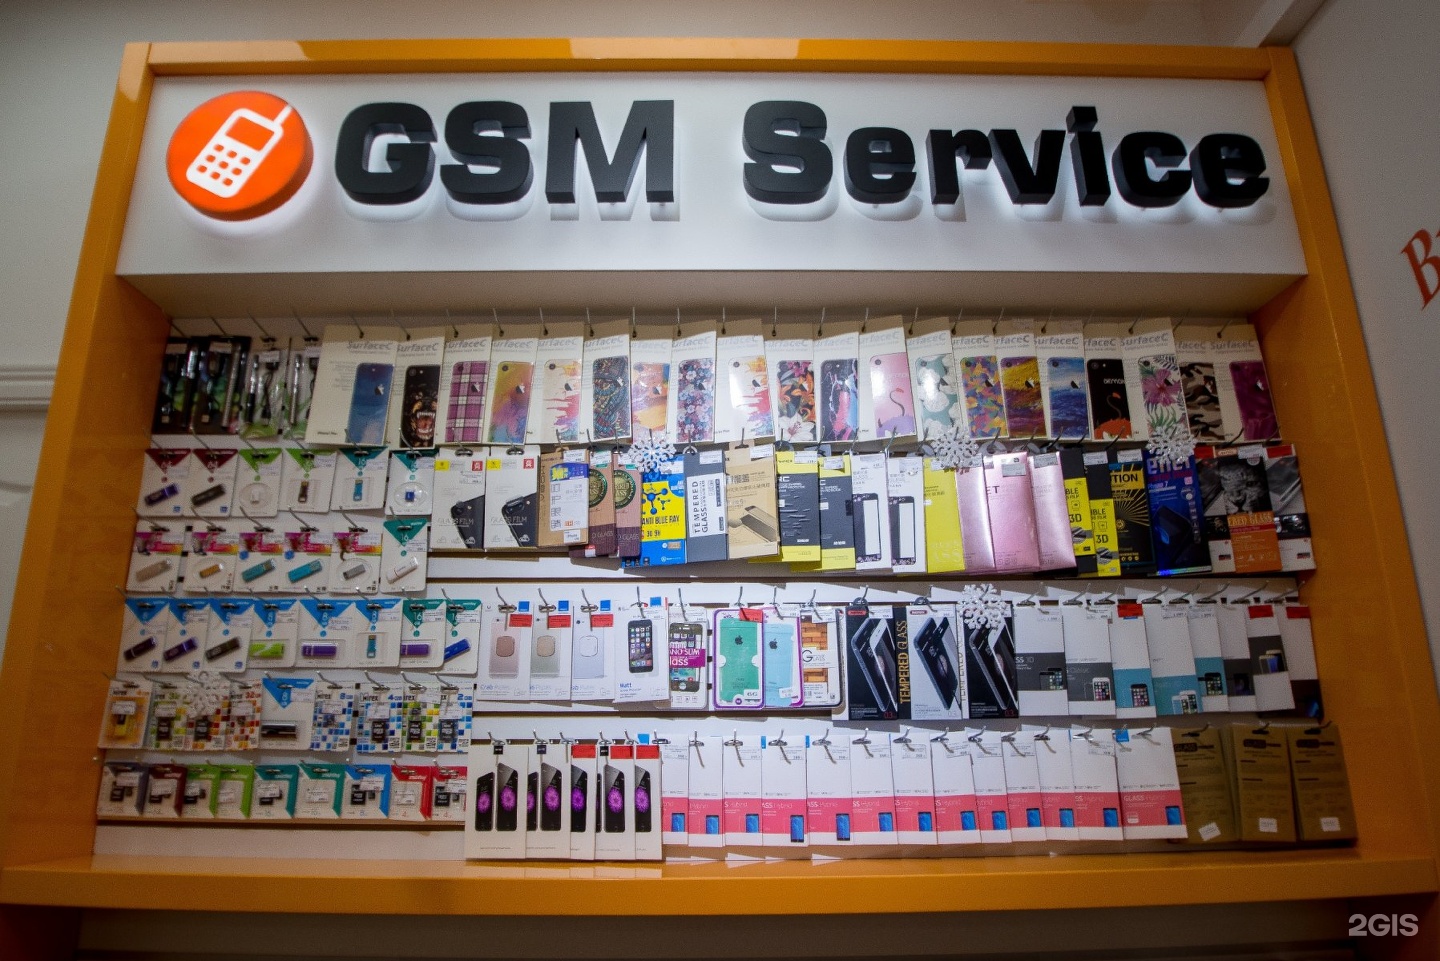 Gsm товары. GSM service. GSM service Омск. GSM service Омск каталог товаров. GSM service Омск реклама.